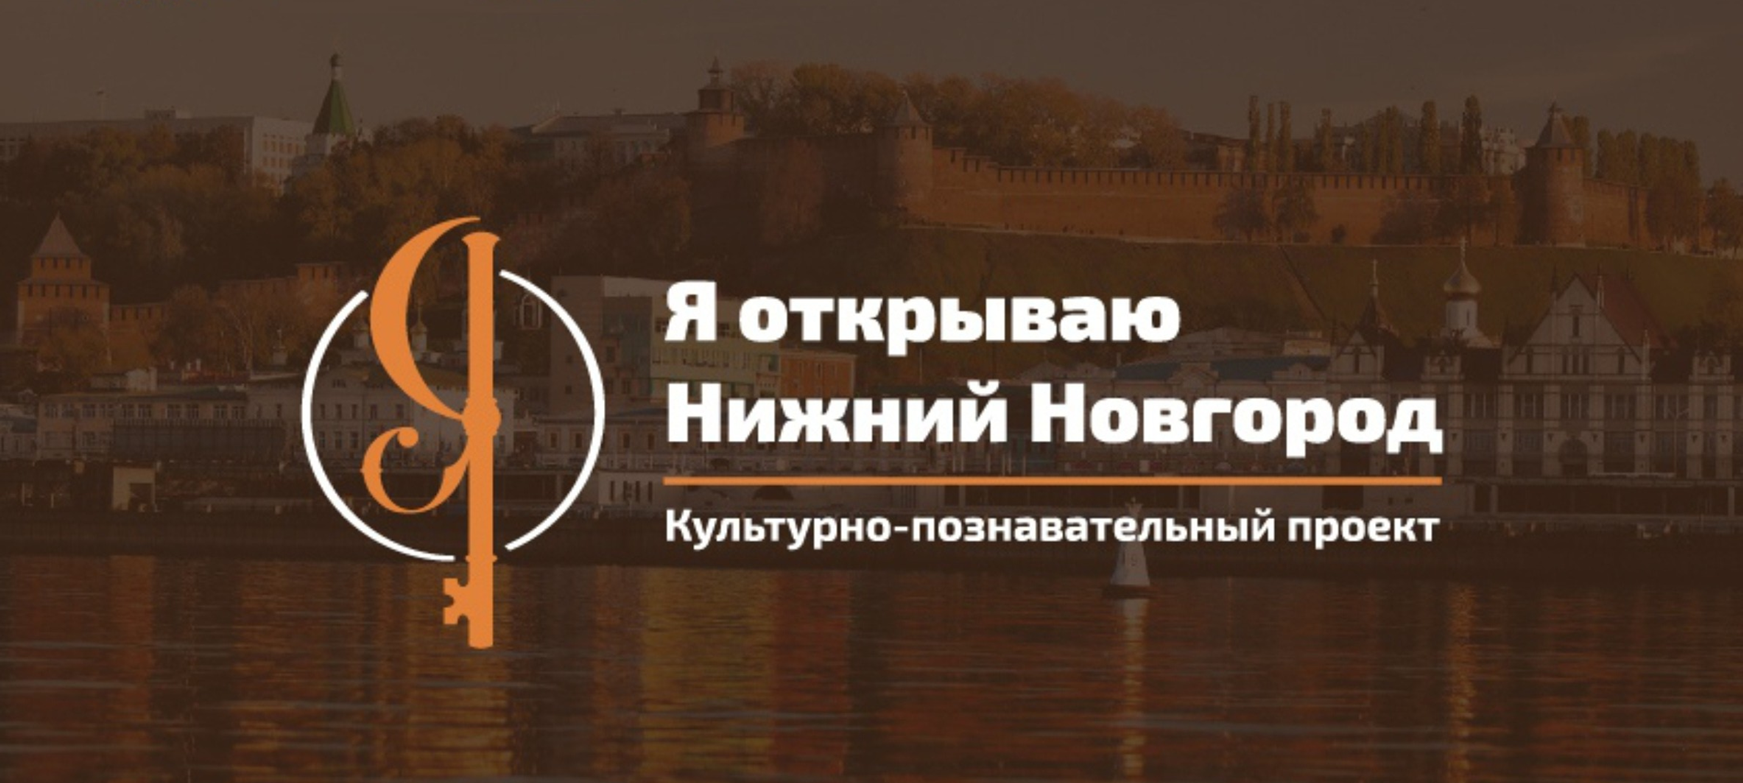 Я открываю Нижний Новгород